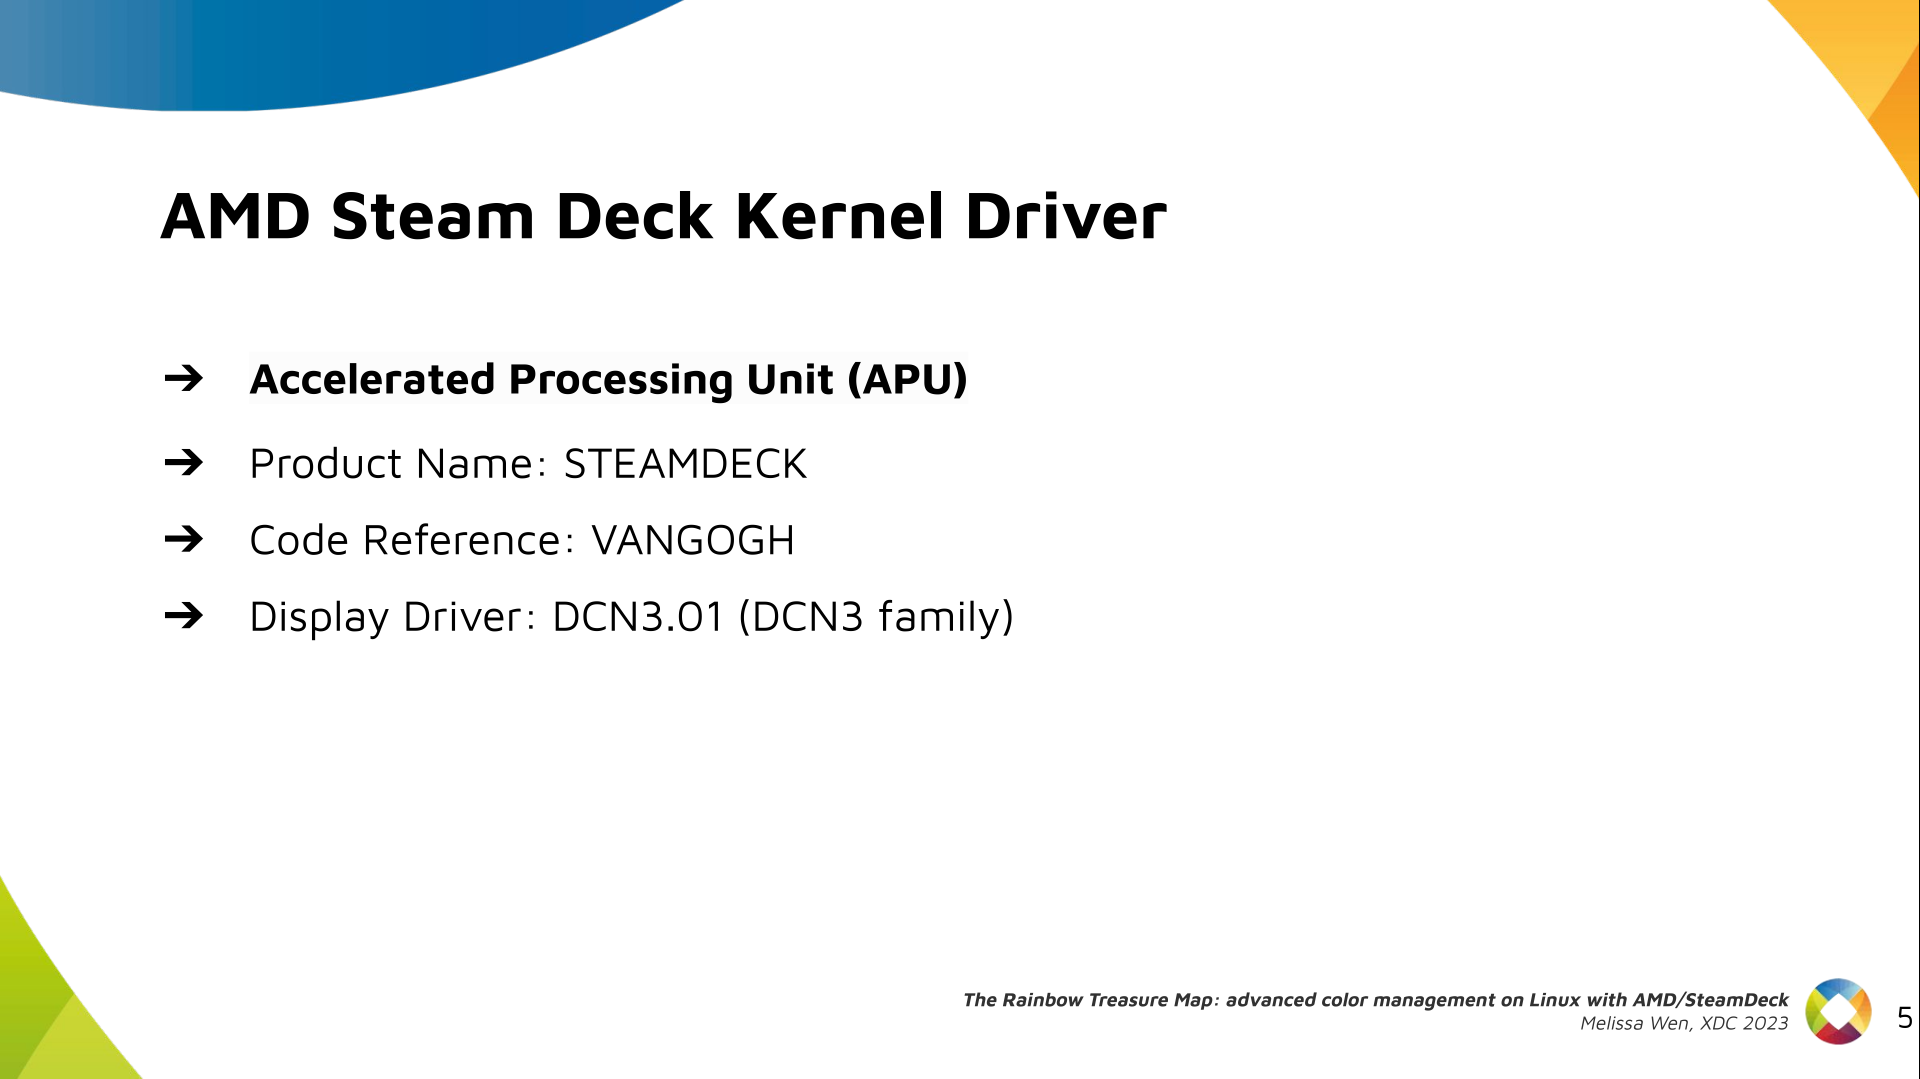 Slide 5: Describe the AMD/SteamDeck - our hardware